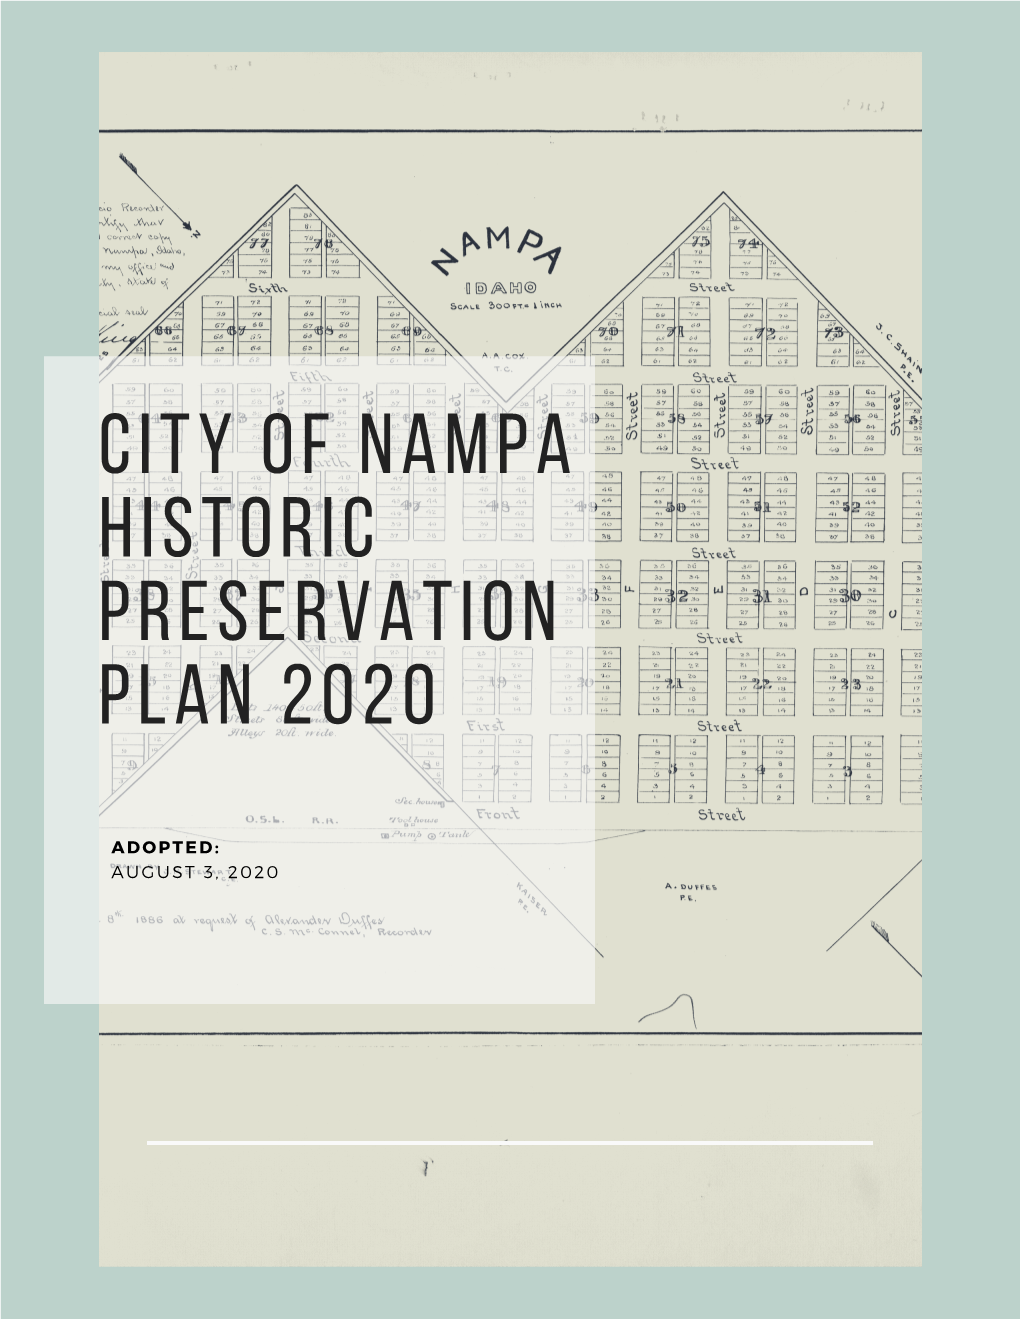 City of Nampa Historic Preservation Plan 2020